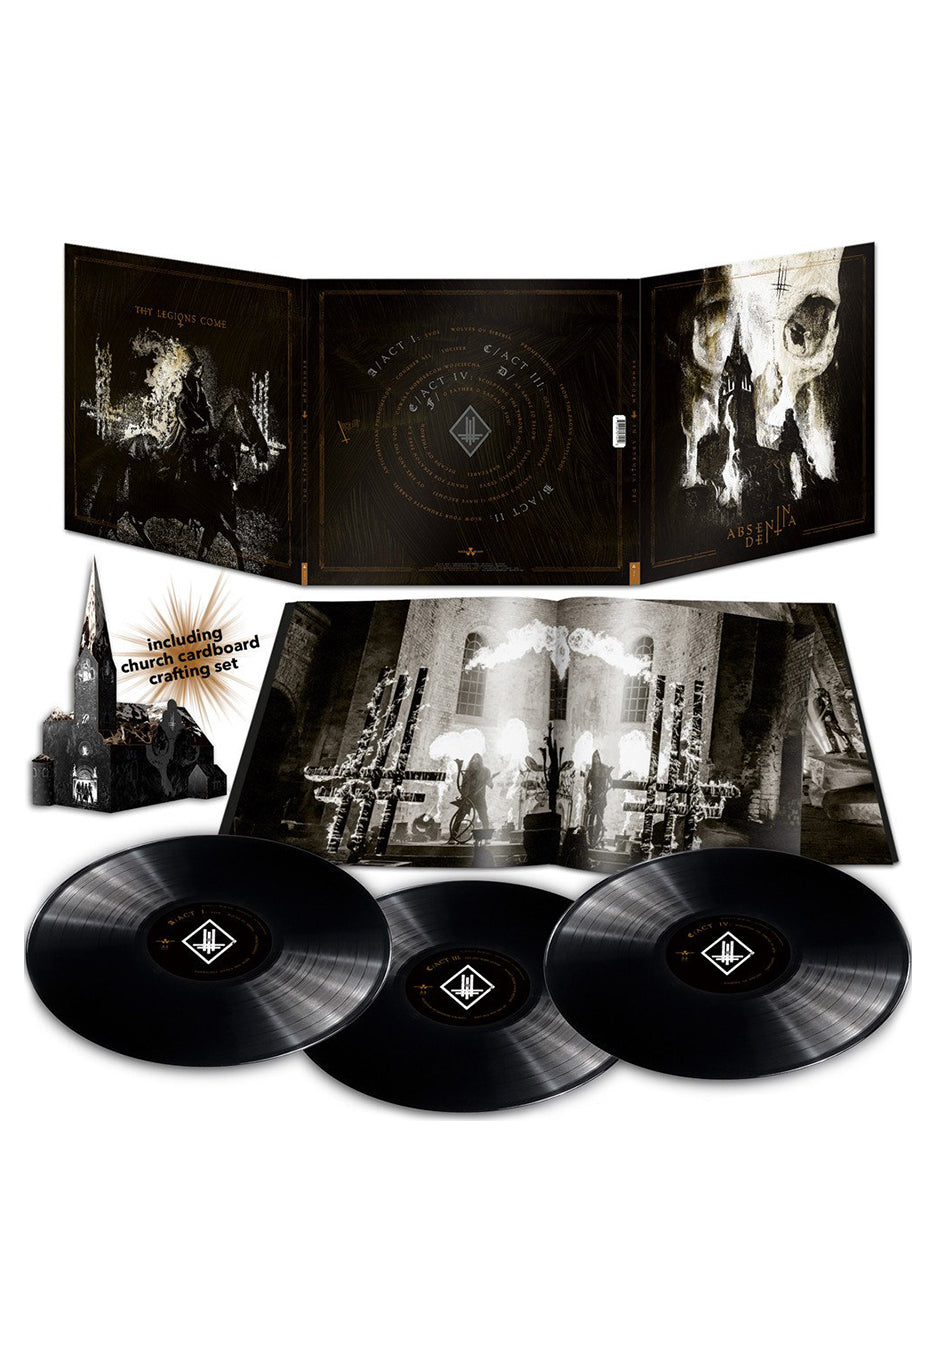 Behemoth - In Absetia Dei - 3 Vinyl